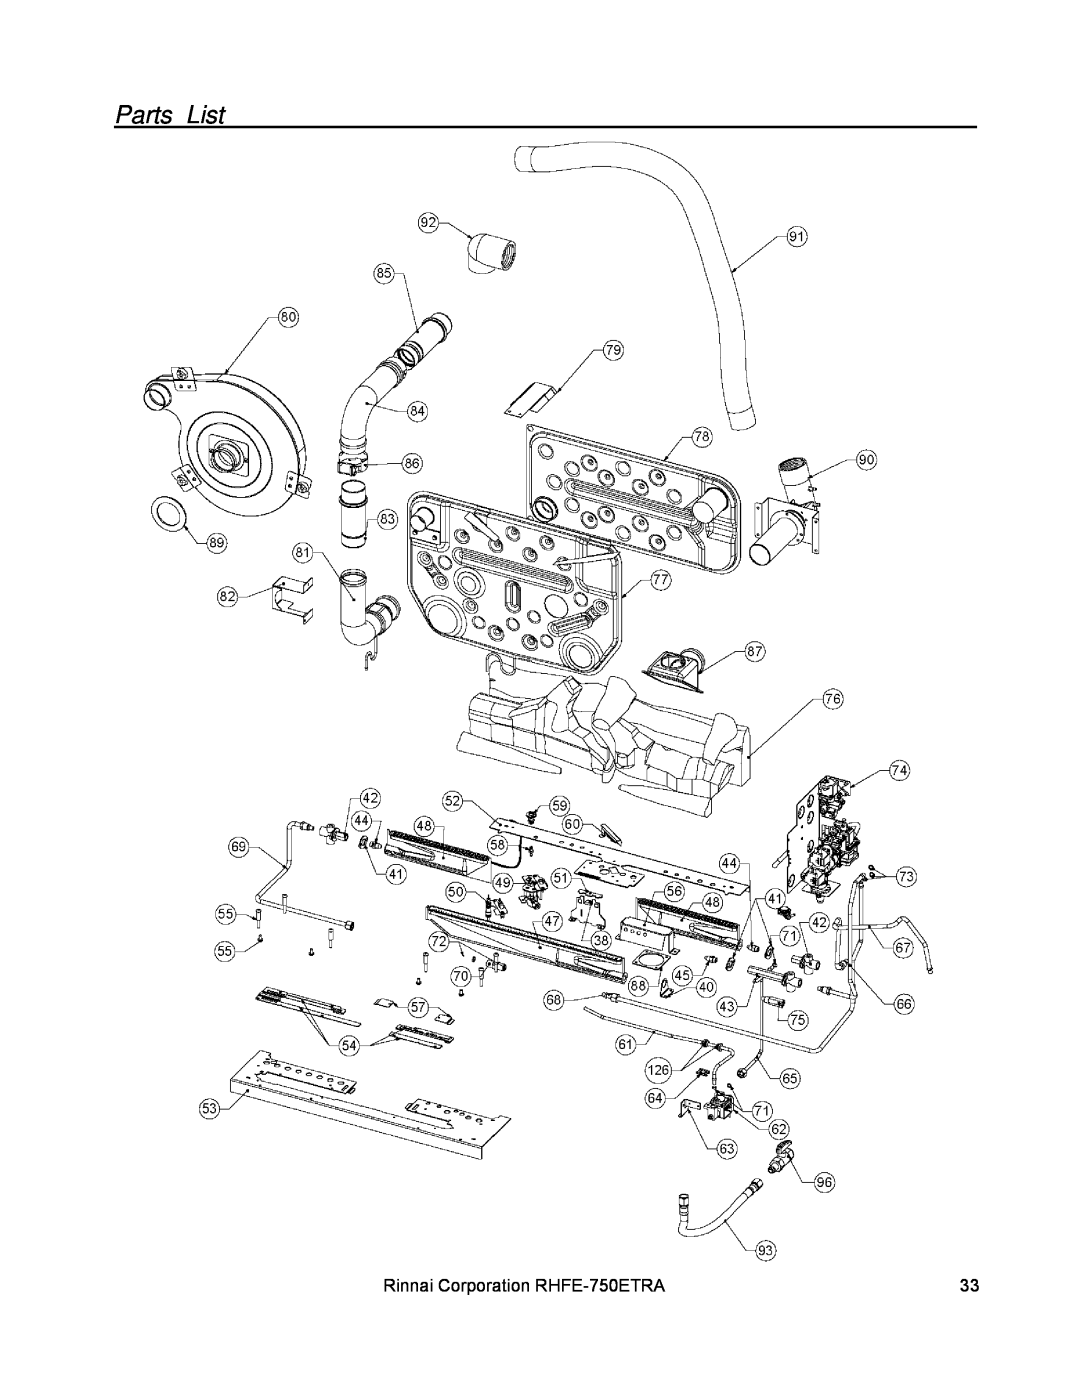 Rinnai installation manual Parts List, Rinnai Corporation RHFE-750ETRA 